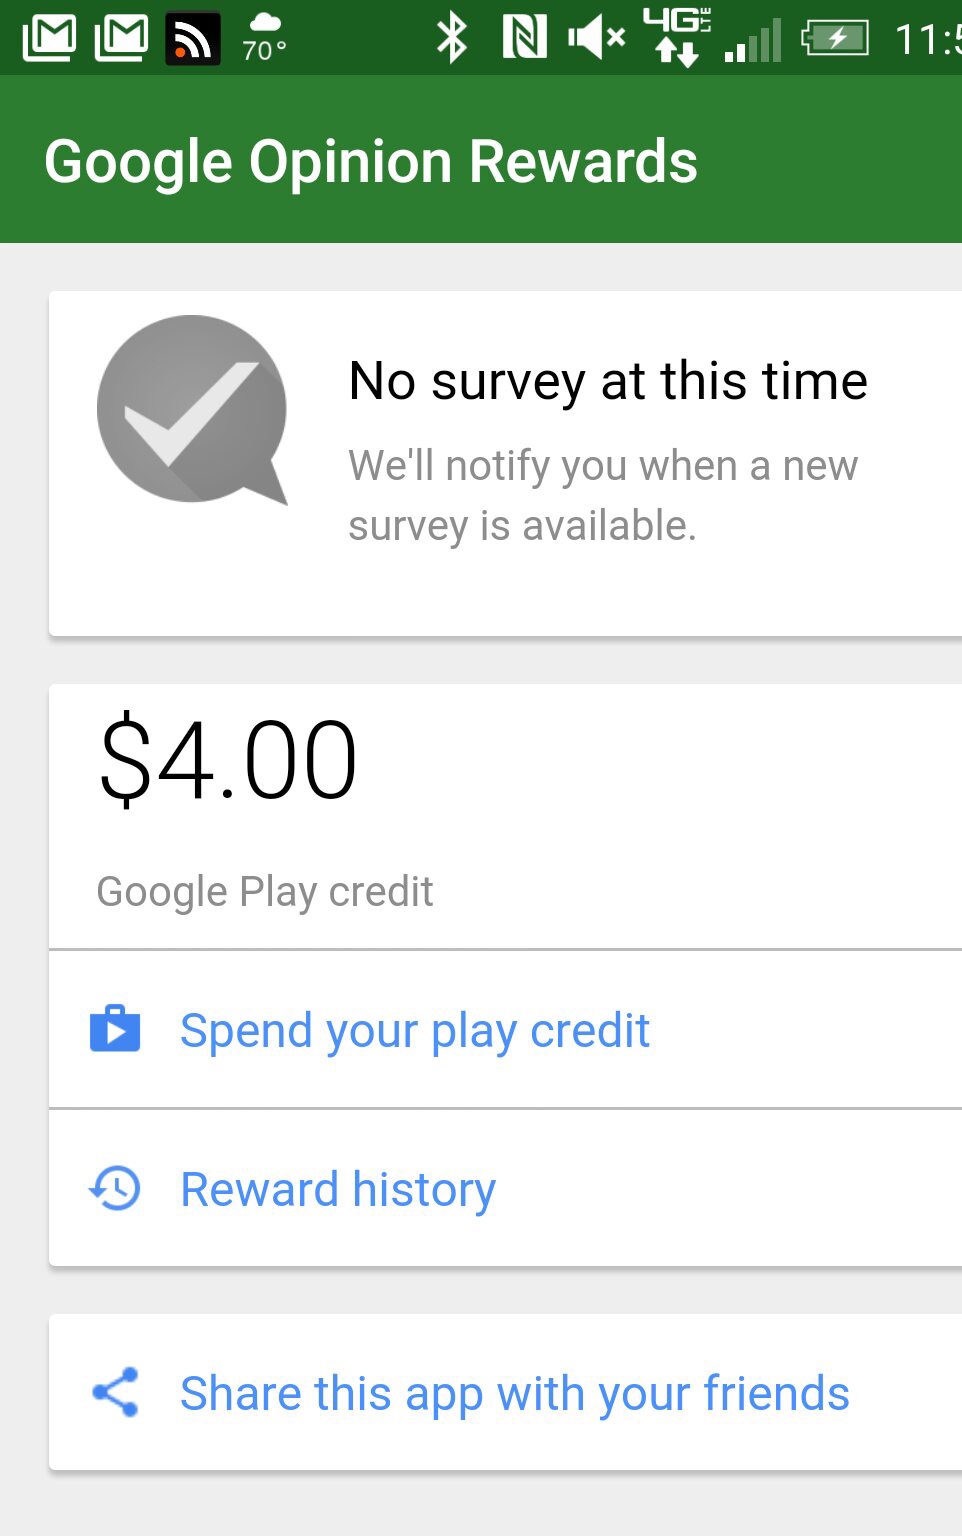 google opinion rewards lets you get